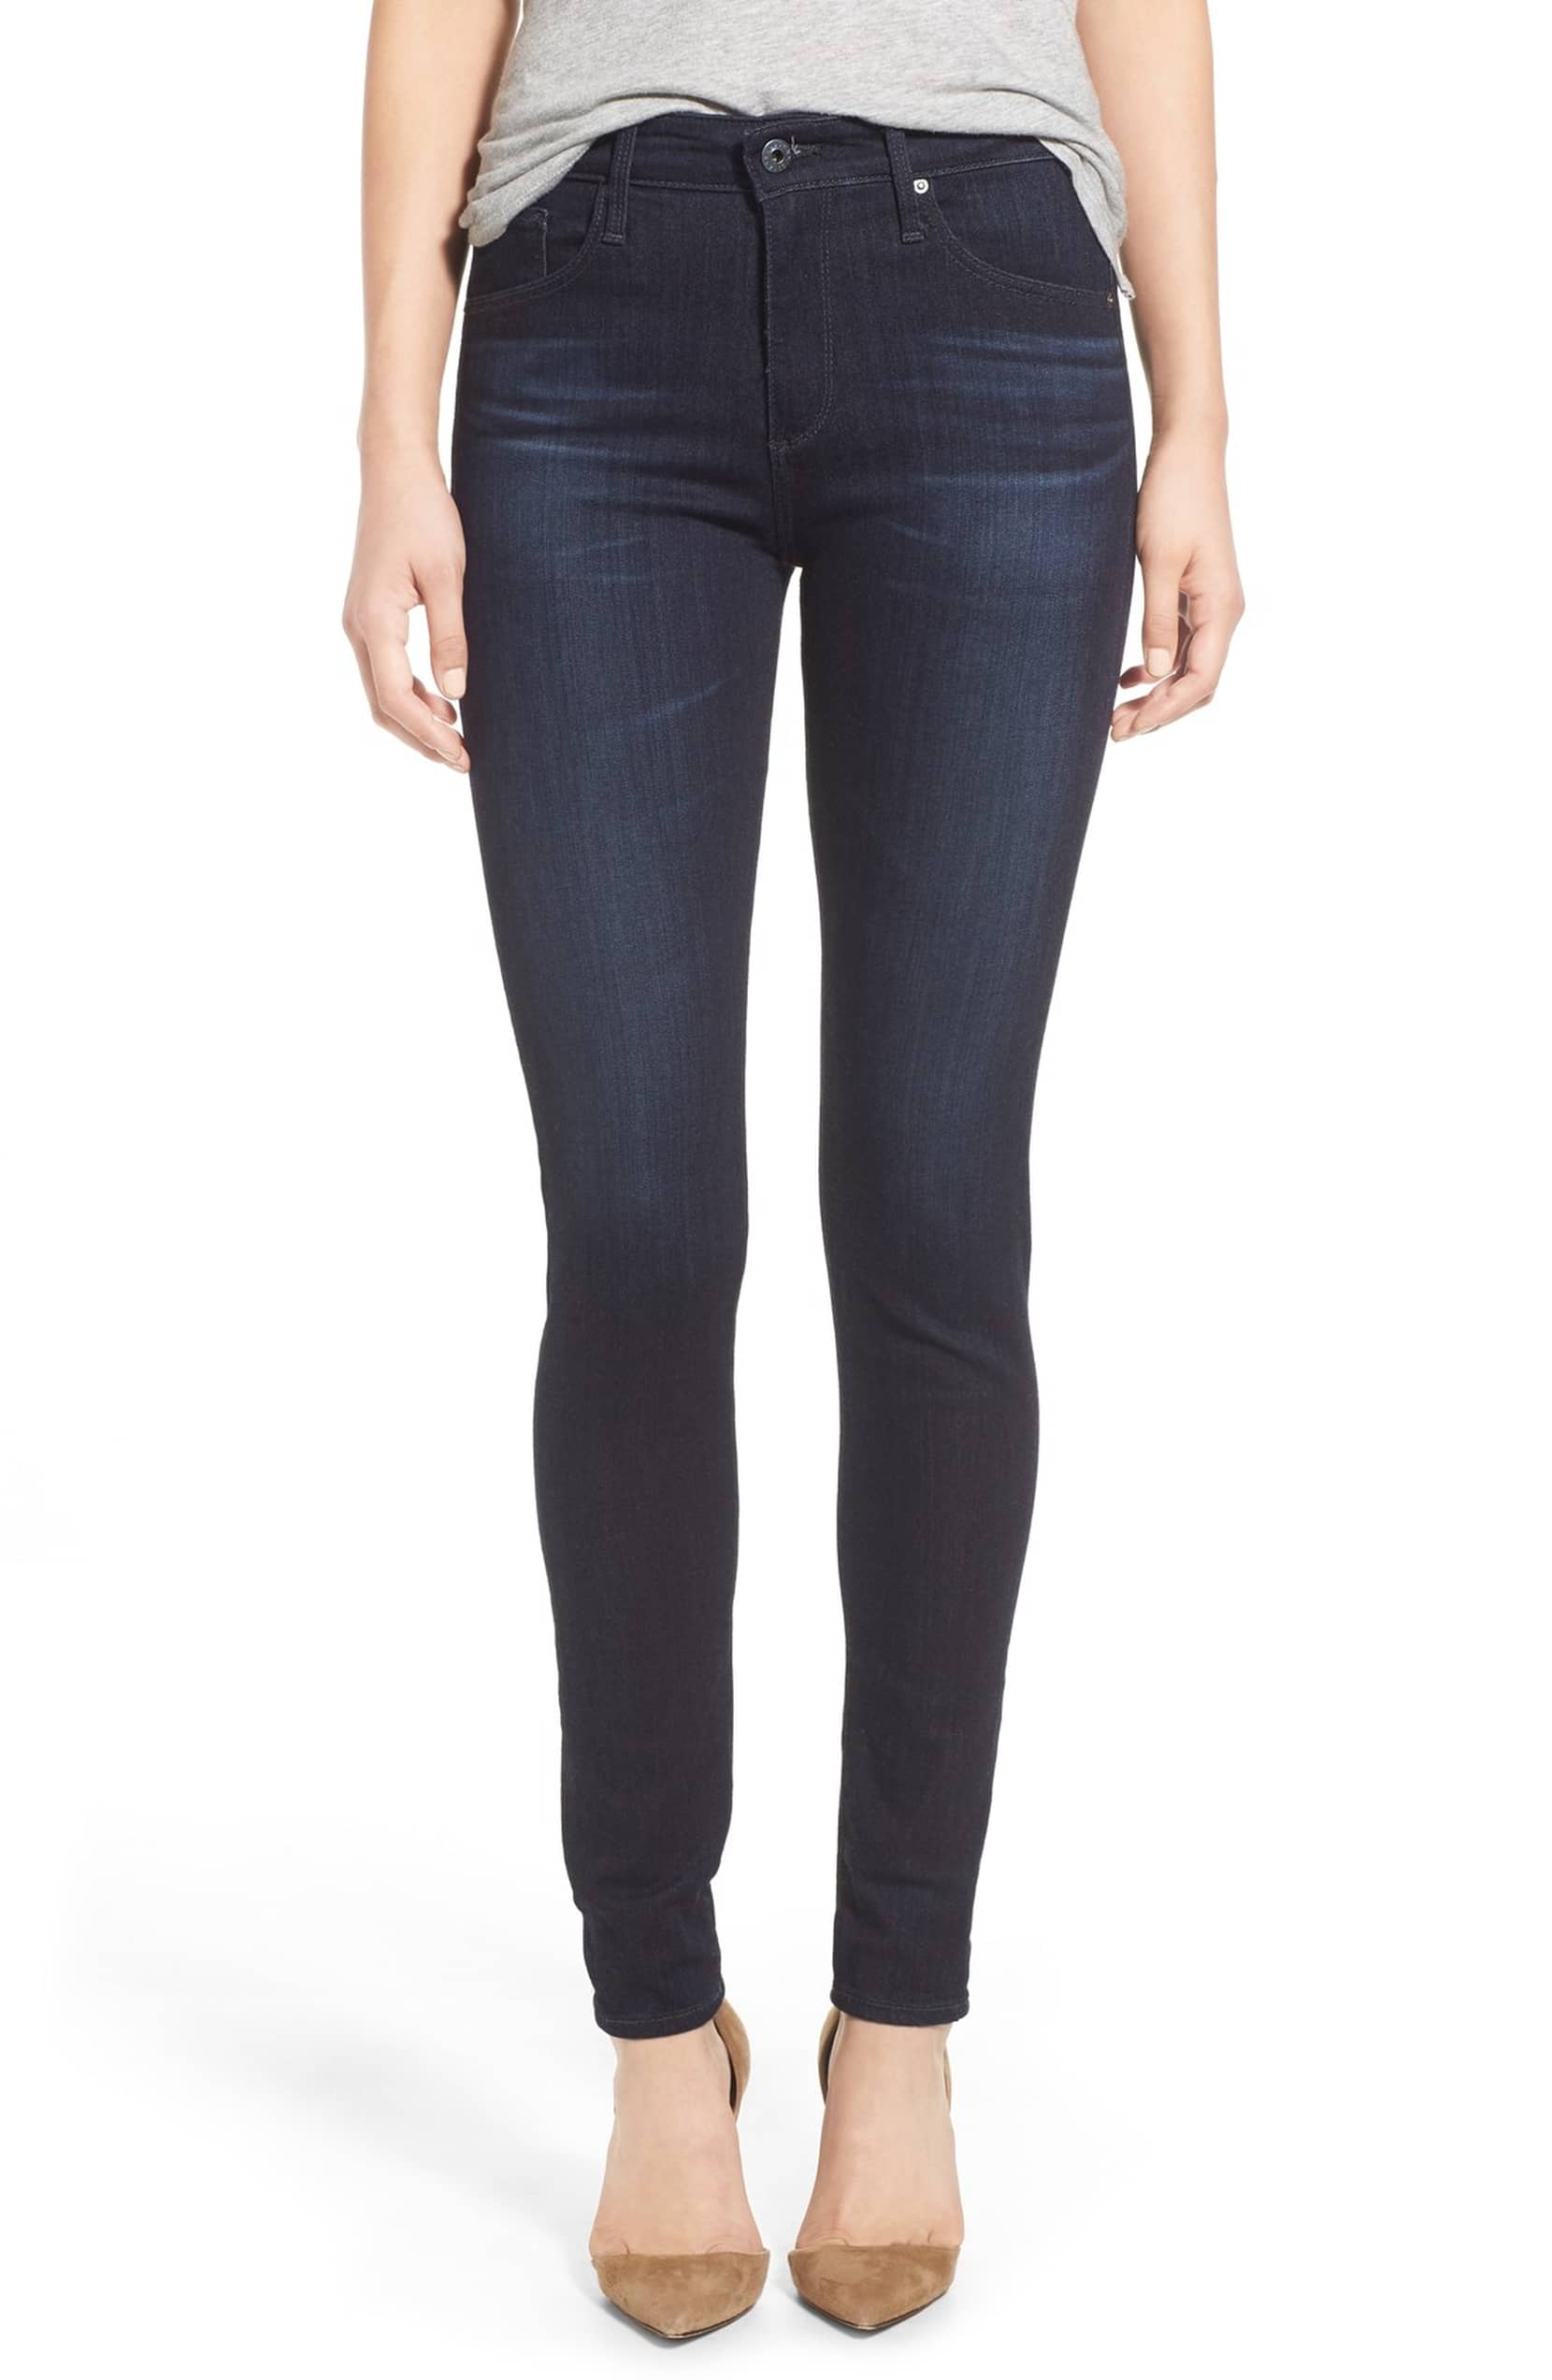 Shop AG High Waist Skinny Jeans at Nordstrom